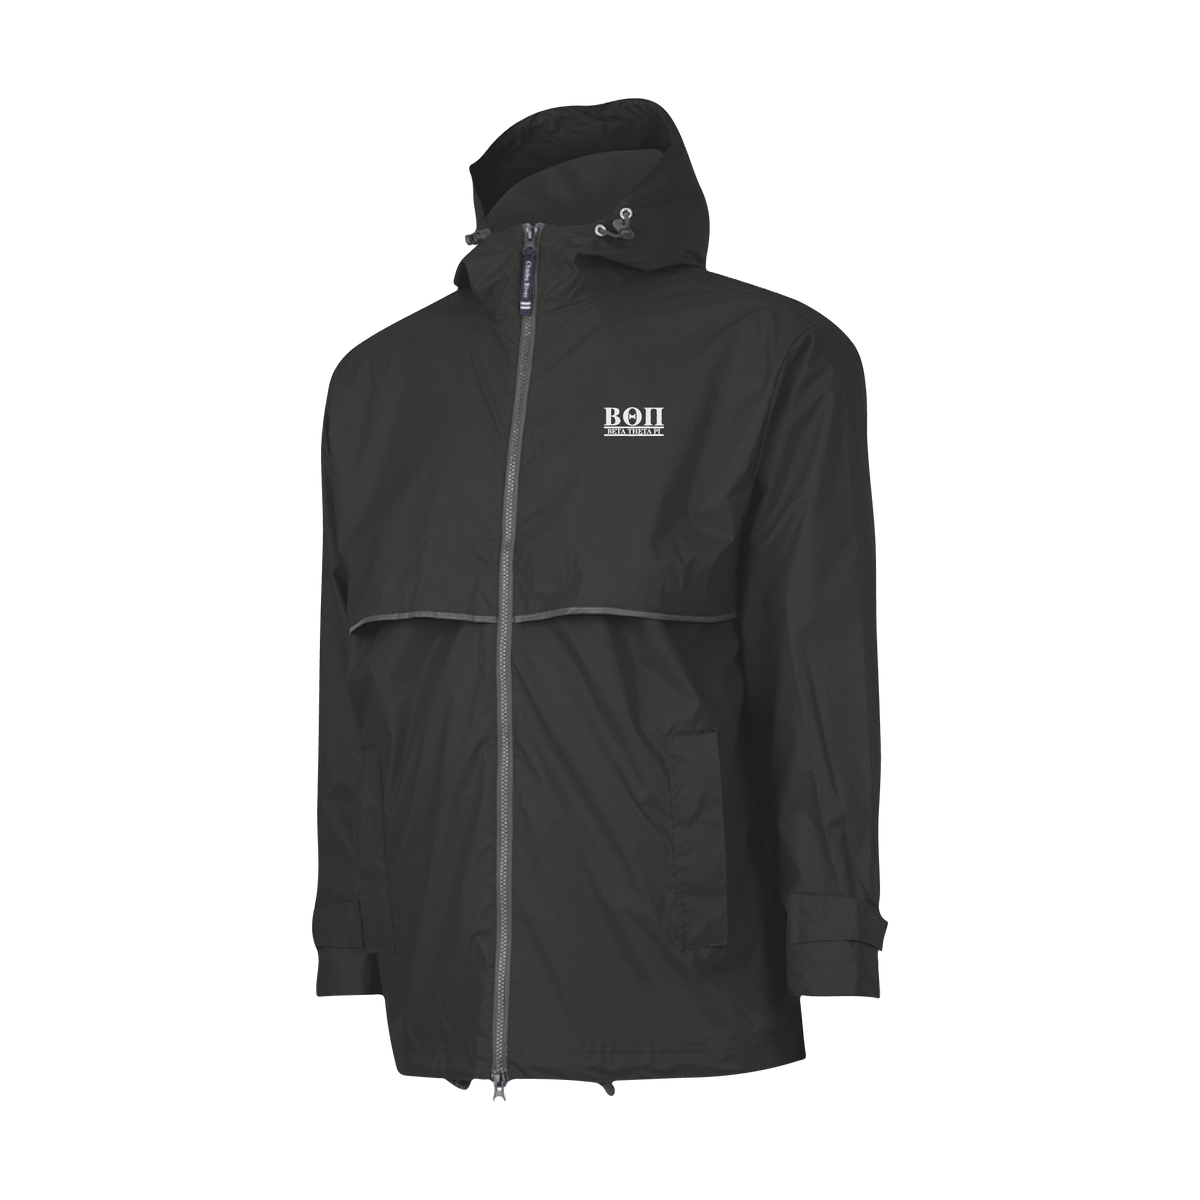 B-Unlimited Greek - Rain Jacket (BETA) - Charles River - 9199 - New Englander Rain Jacket - Black